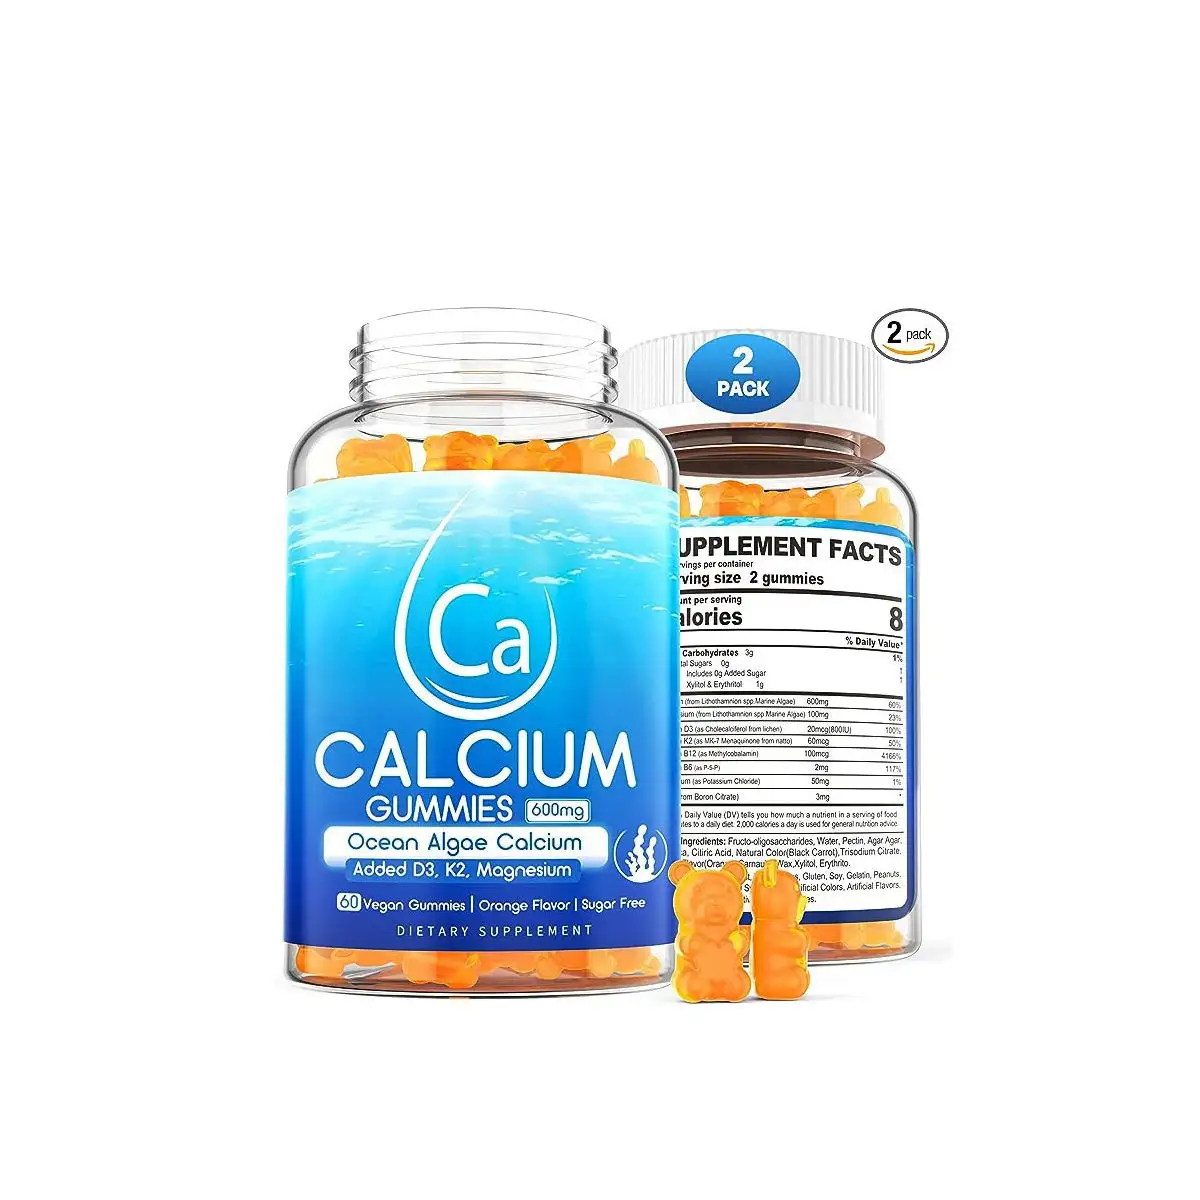 Adult Multivitamin Calcium Gummies Supplement Vitamin D3 B12 B6 K2 Excluding Pregnant Women